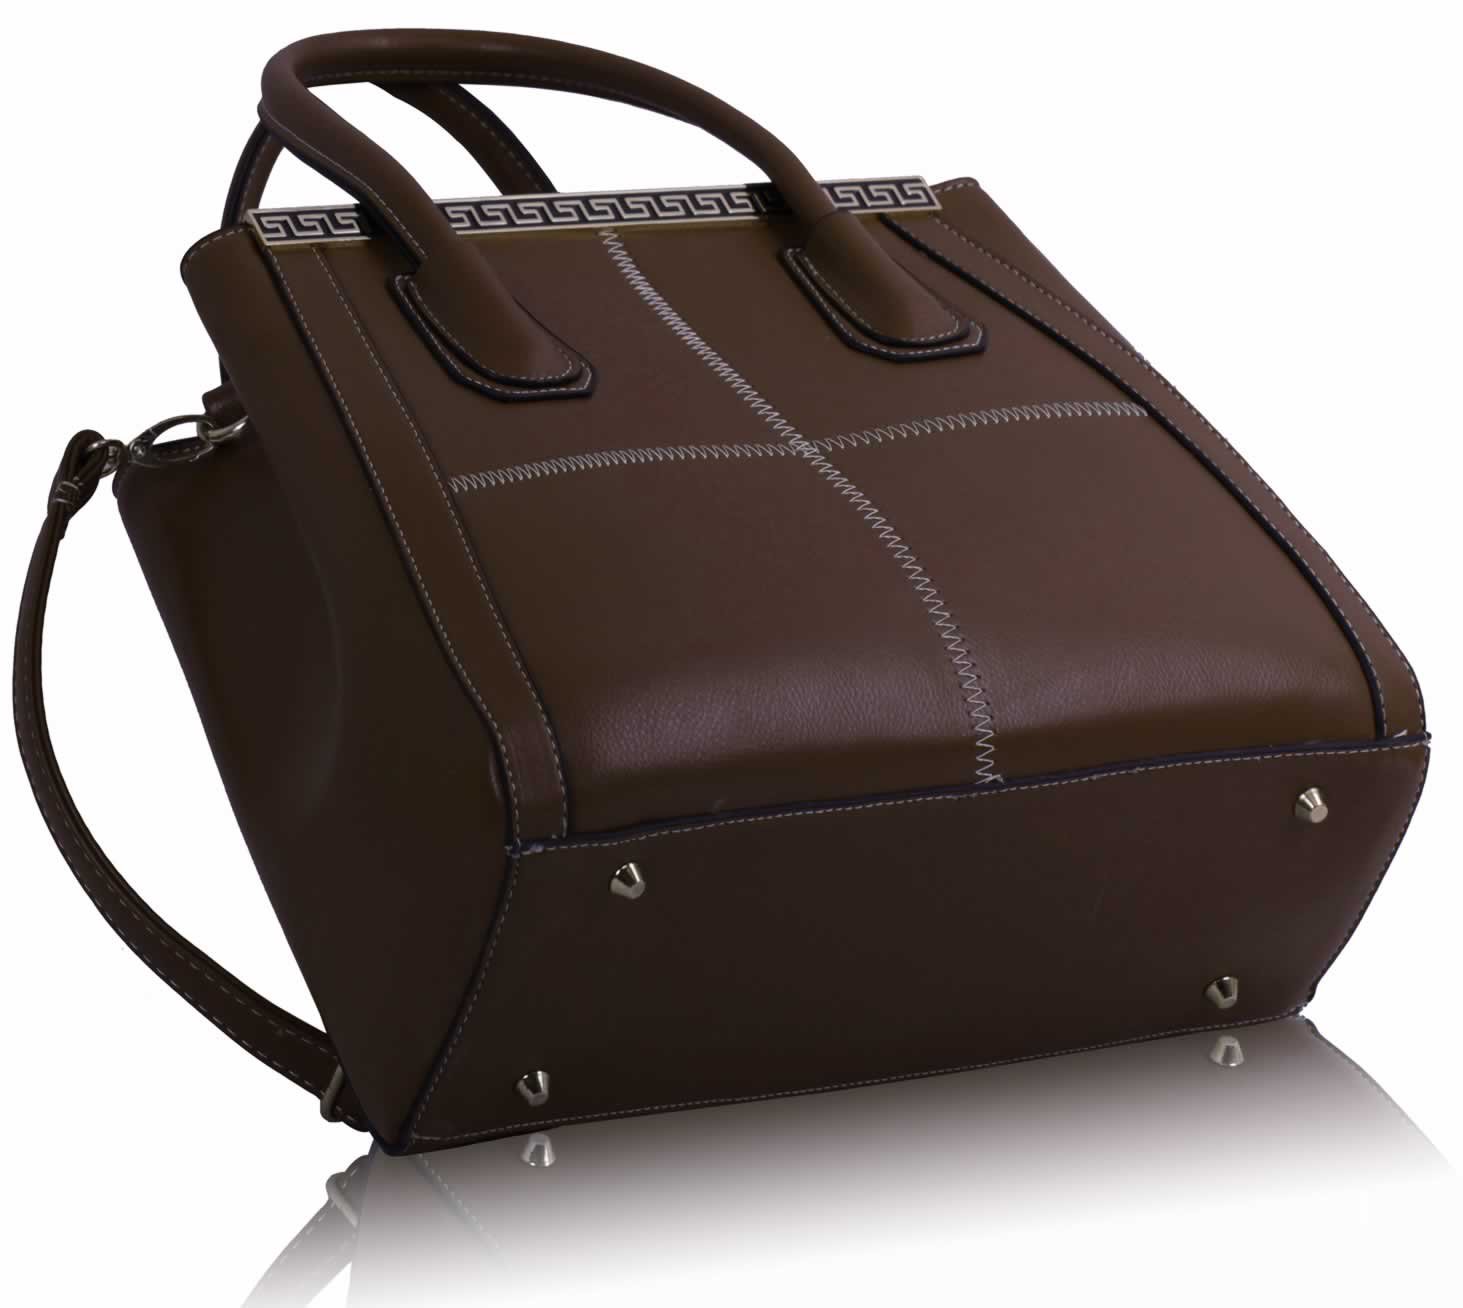 Wholesale Bags :: LS0030A - Brown Checkered Fashion Tote Handbag - Ladies handbags, clutch bags ...